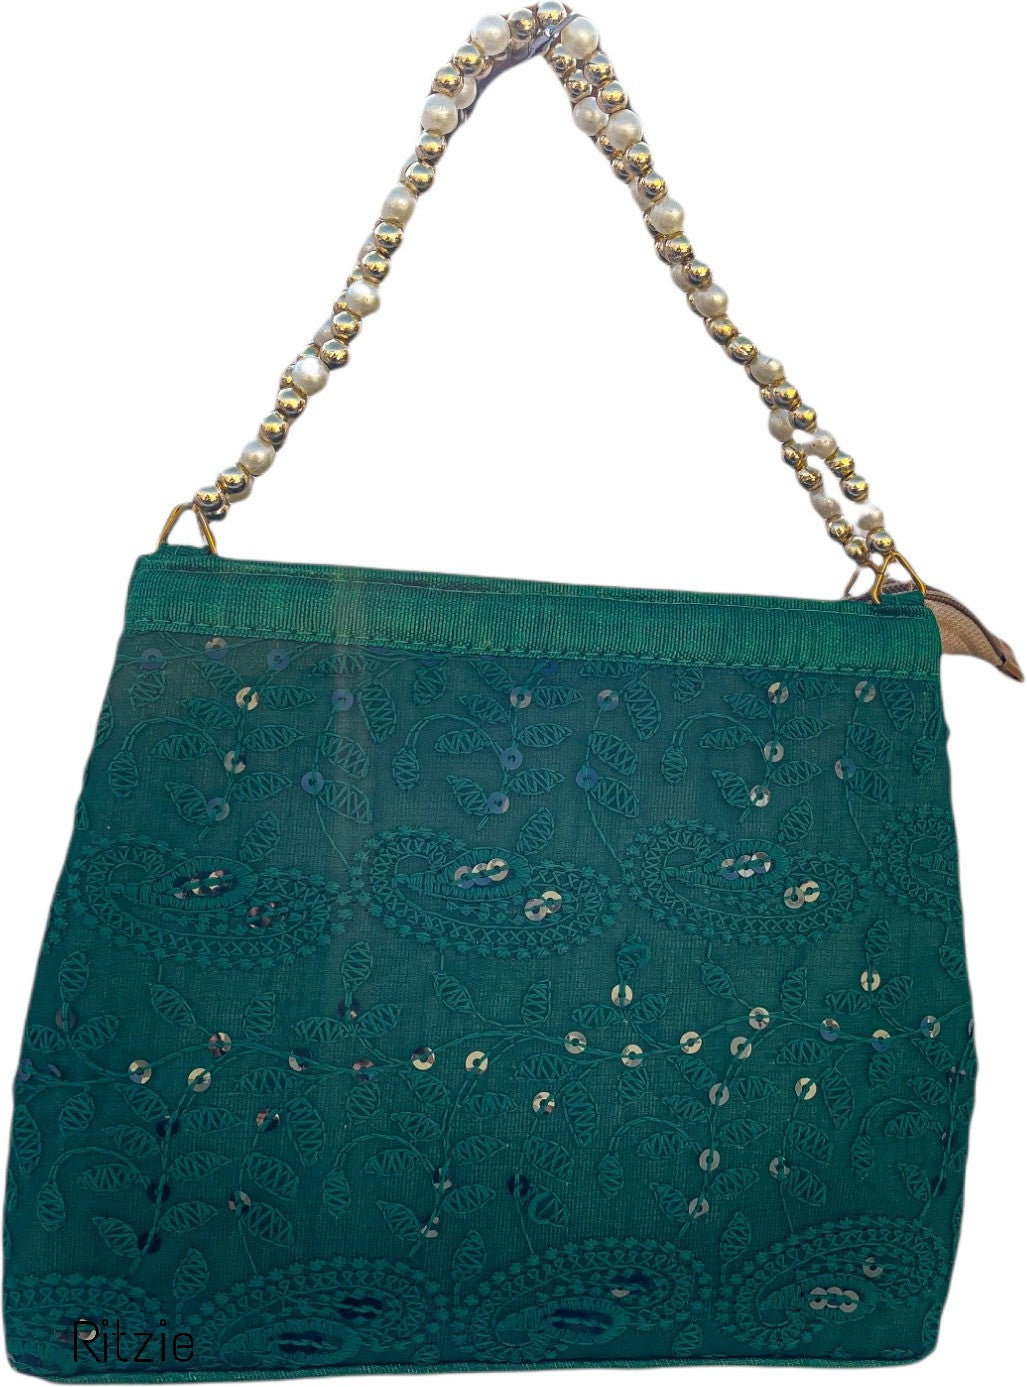 Women's Chickenkari Embroidered Moti Design Handbag    - Ritzie